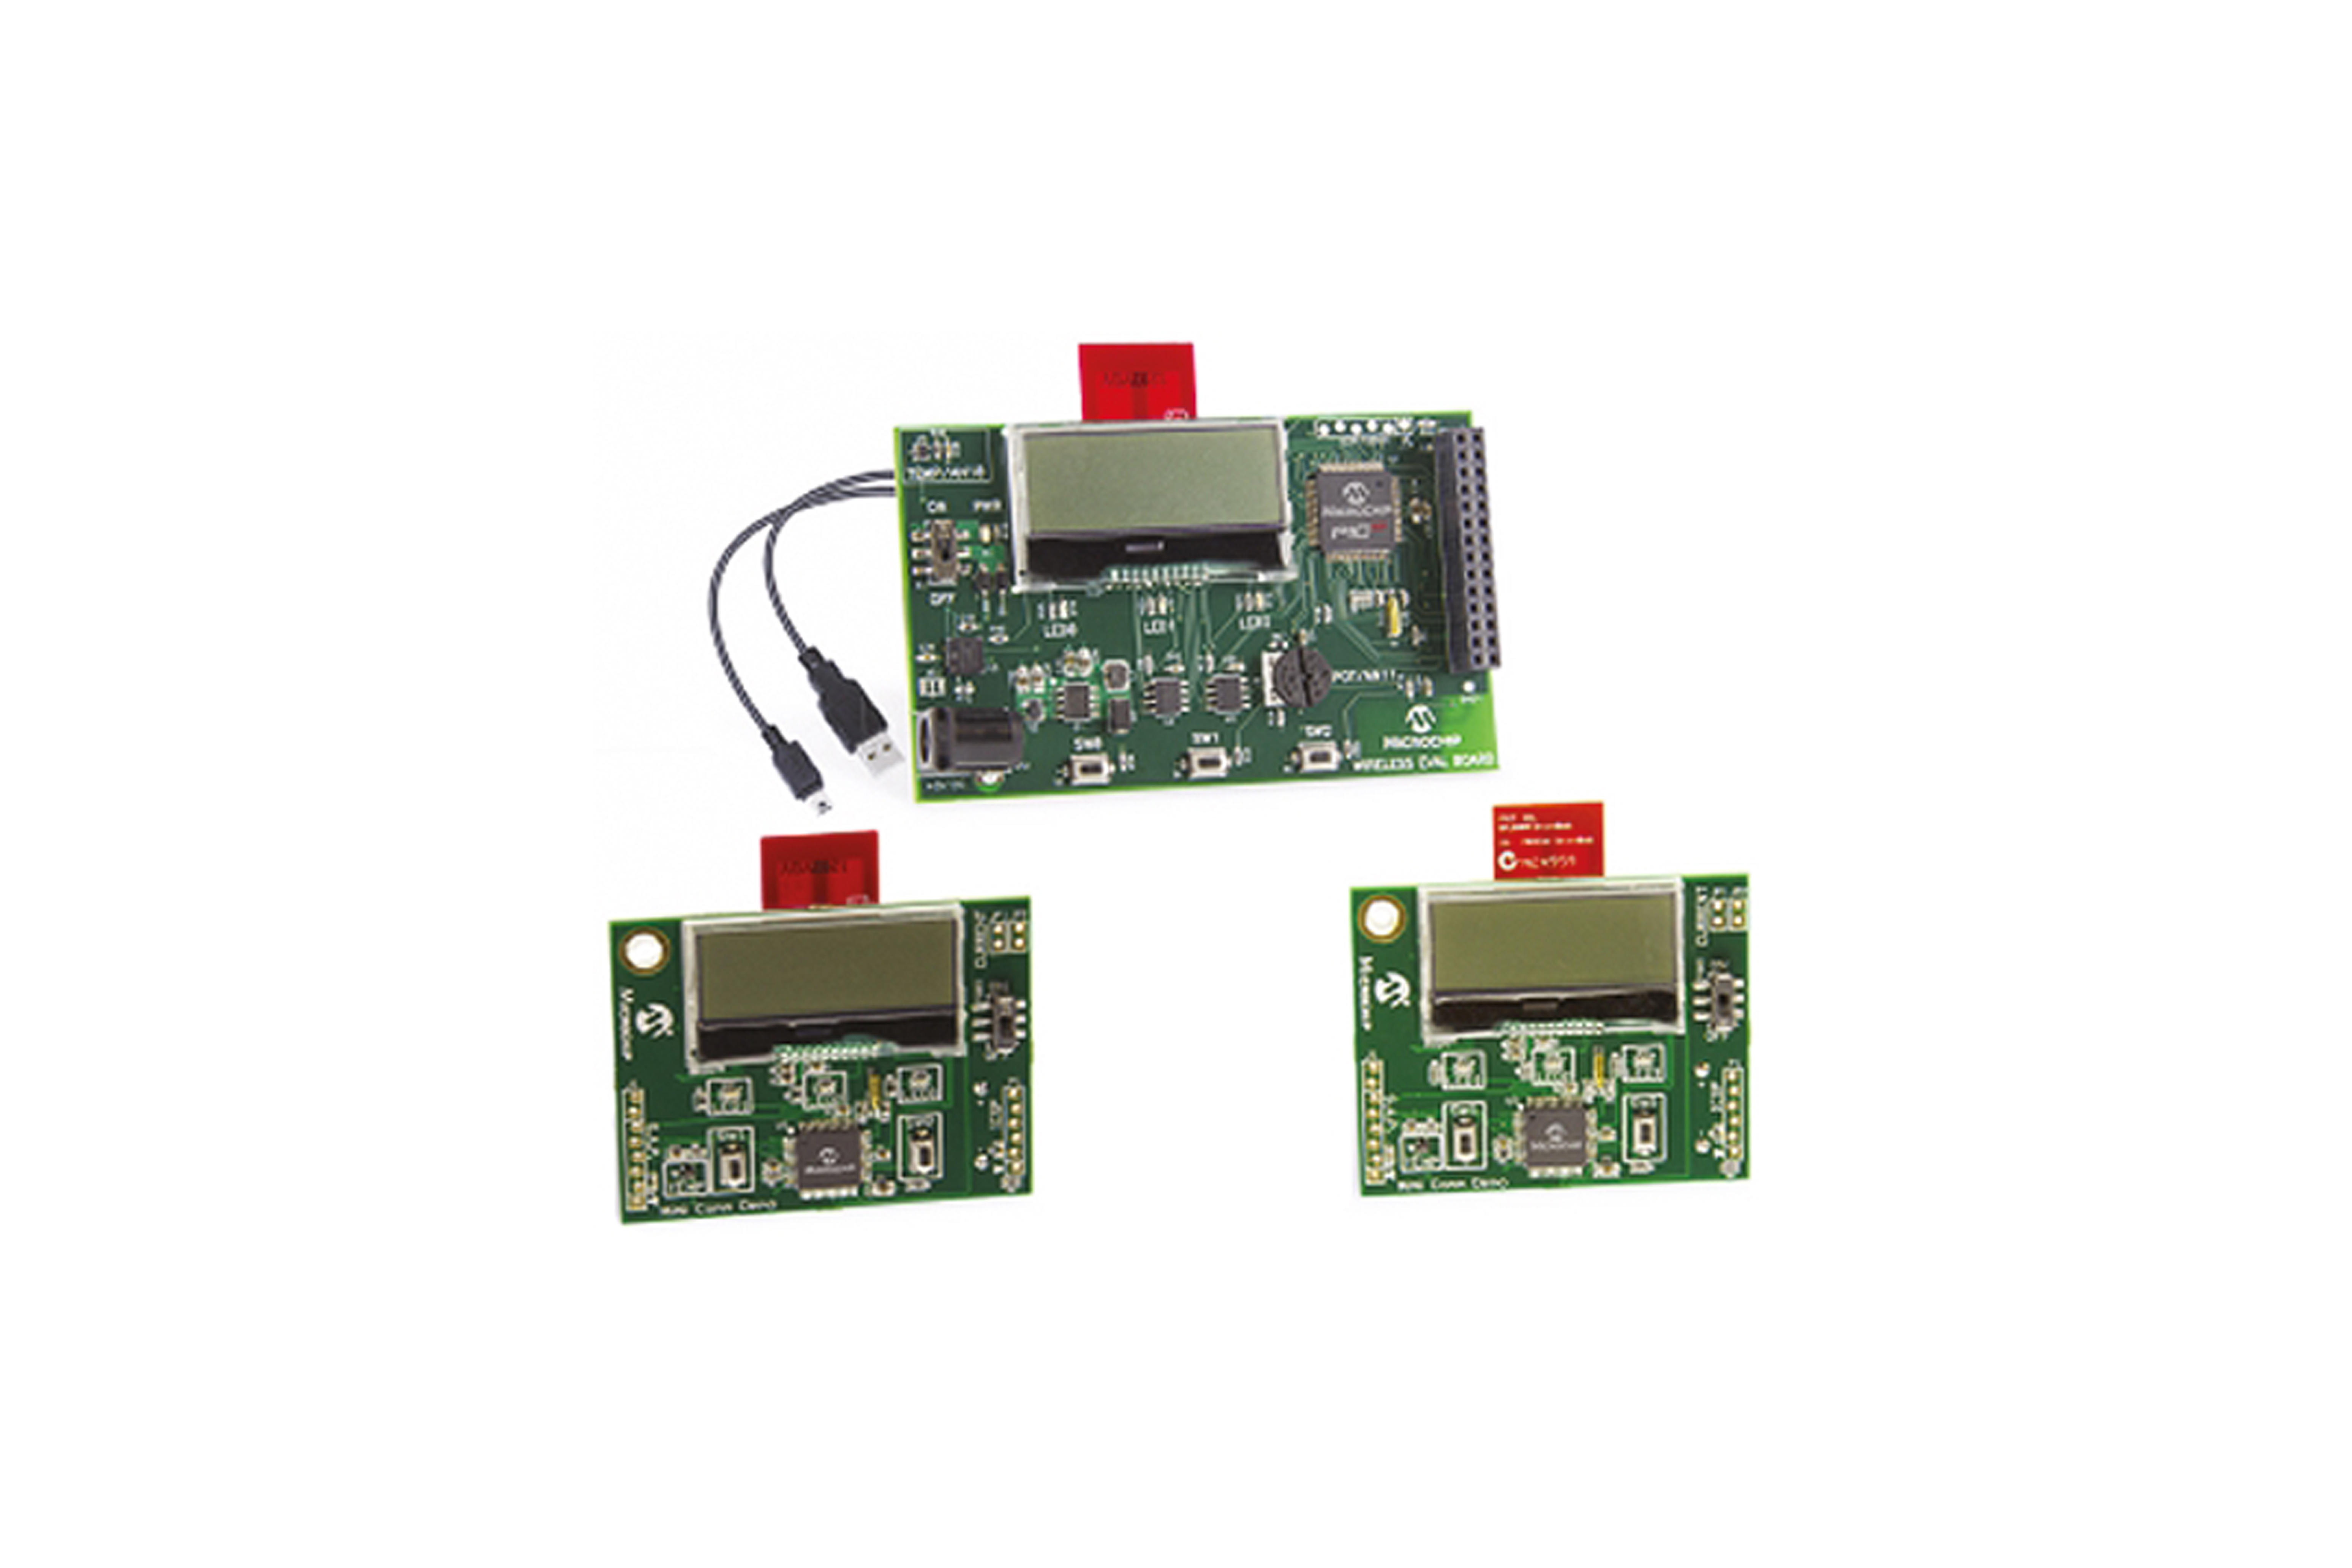 Kit de démo. Microchip MiWi/Wi-Fi 2,4 GHz pour MRF24J/W